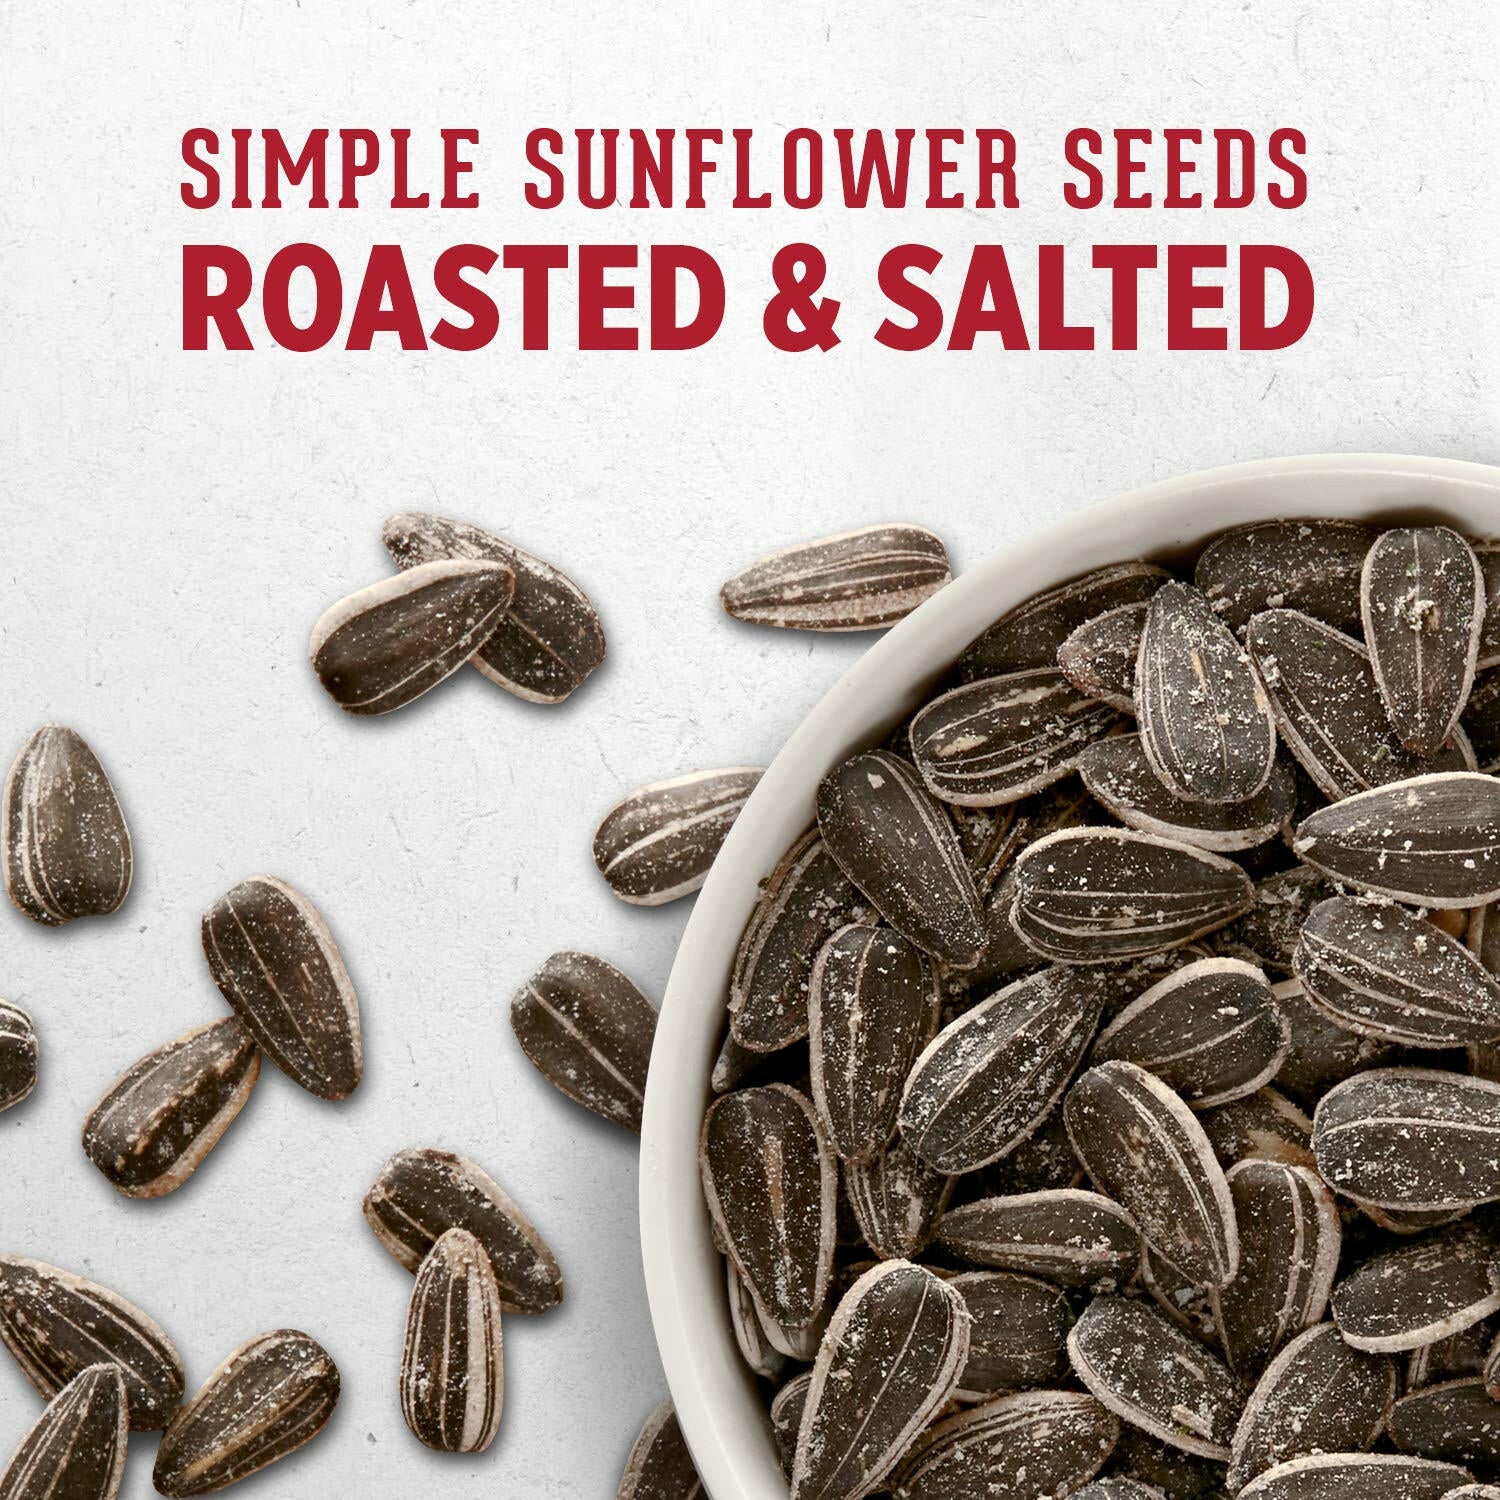 David's Original Jumbo Sunflower Seeds 5.25oz